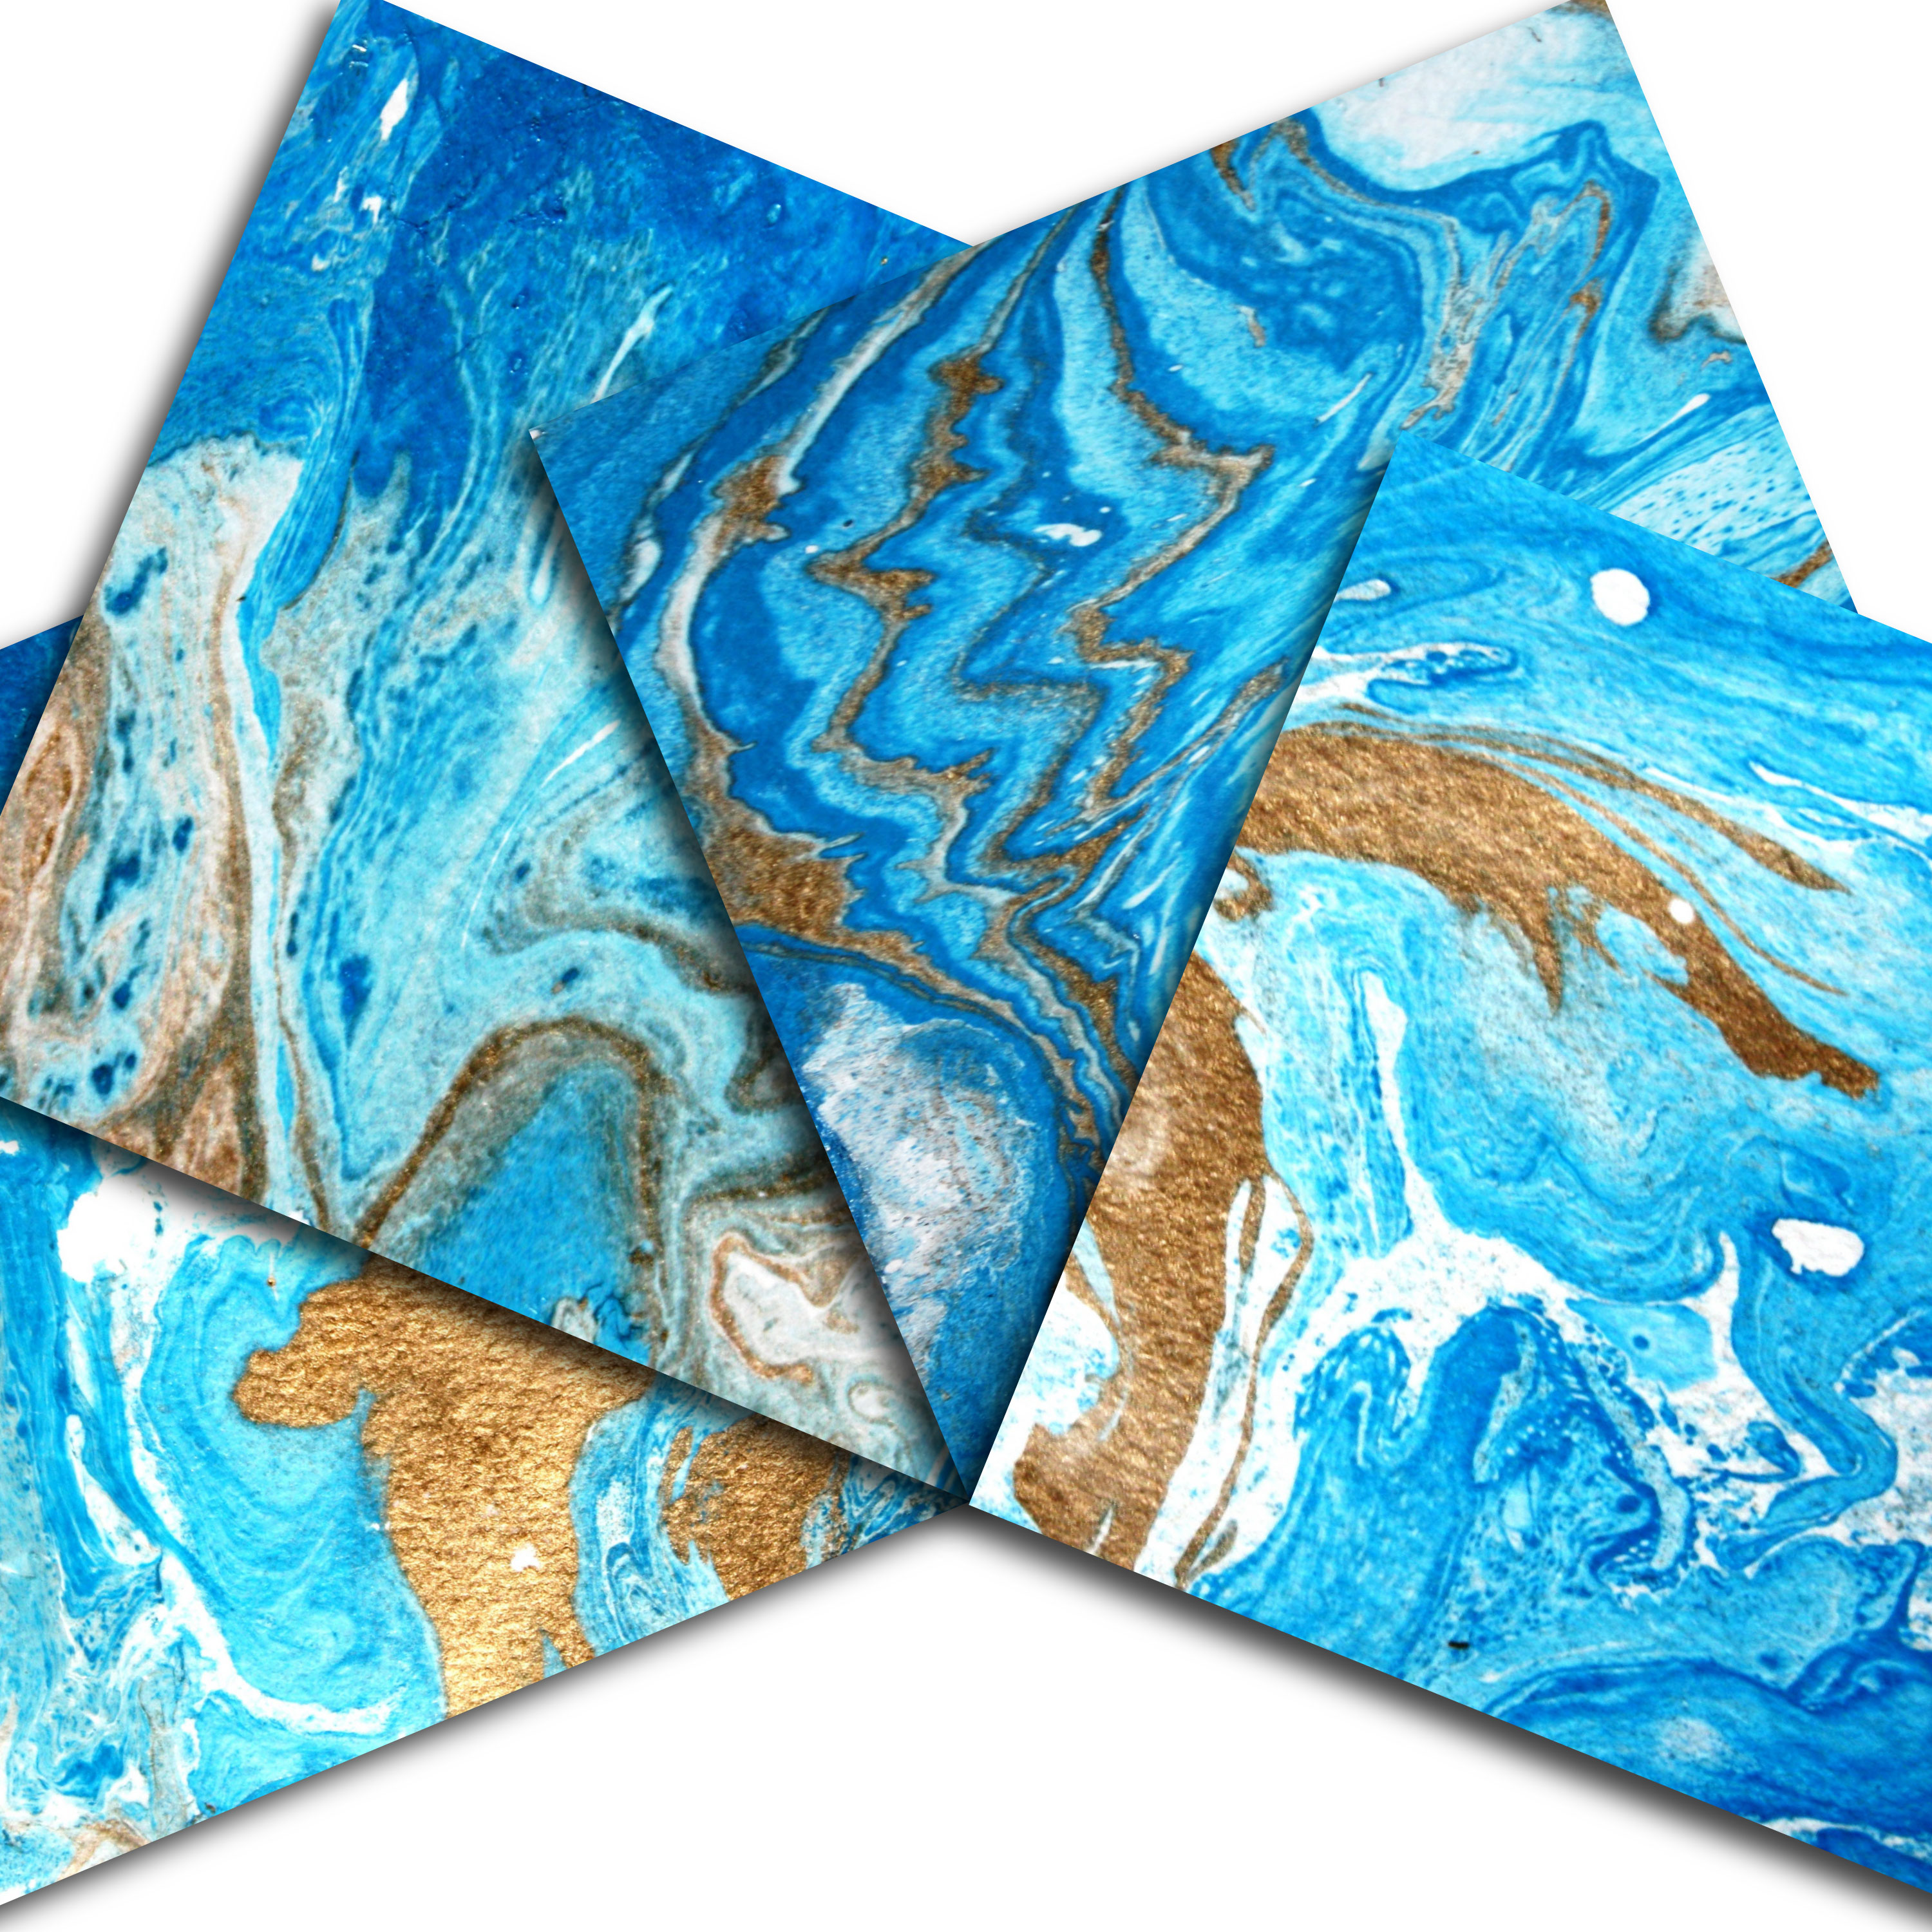 Marble Background Blue and Gold (20185) Backgrounds Design Bundles